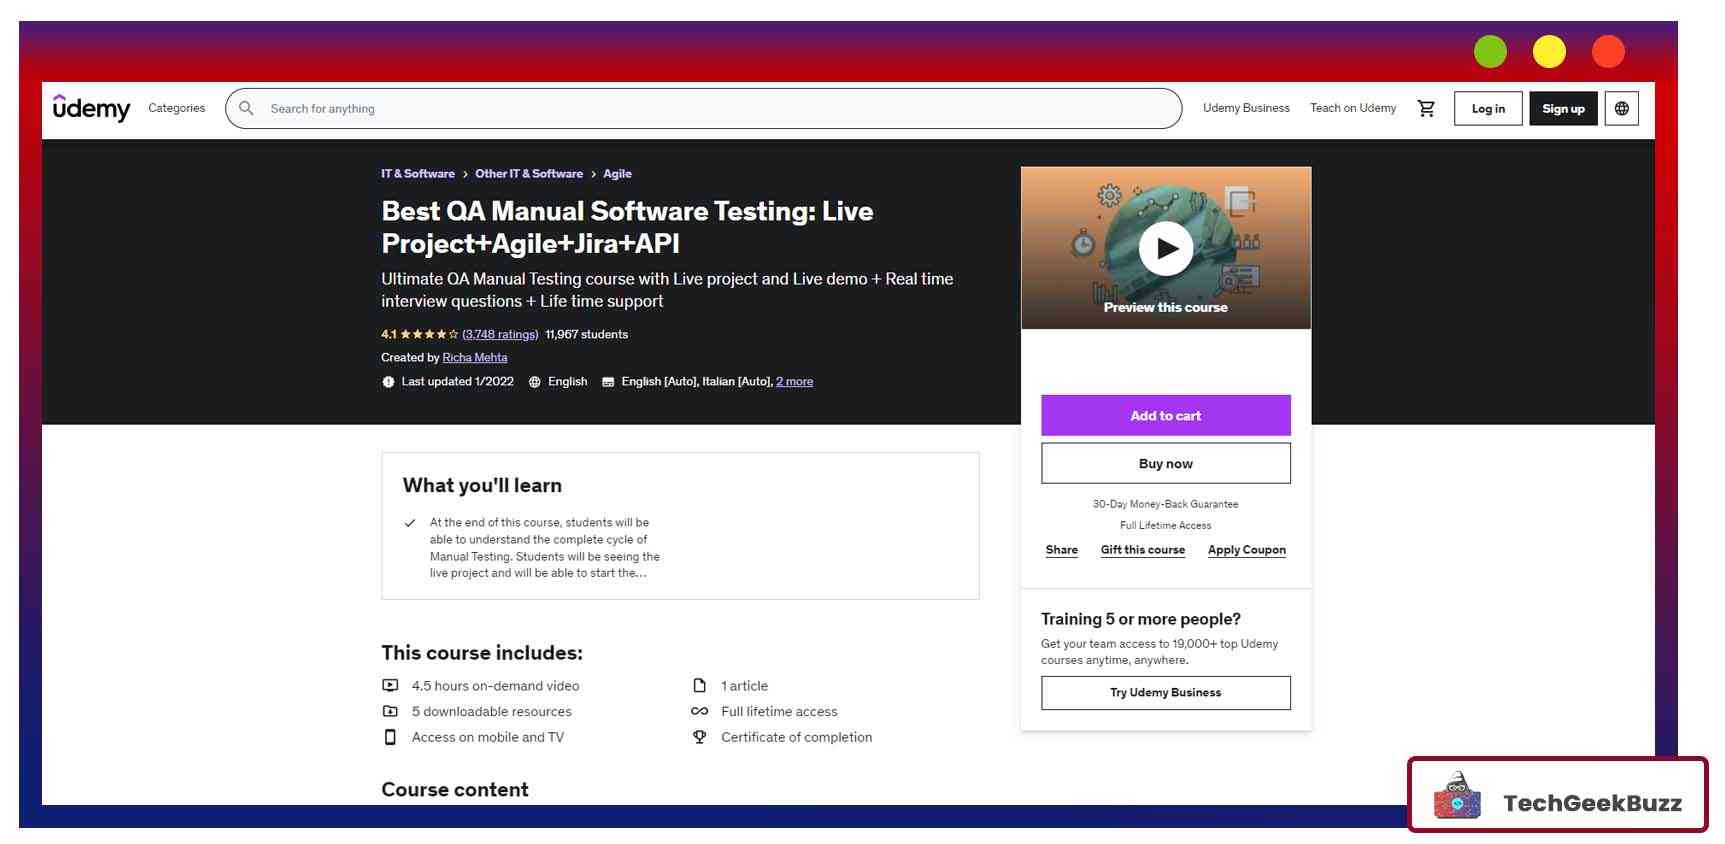 Best QA Manual Software Testing: Live Project+Agile+Jira+API